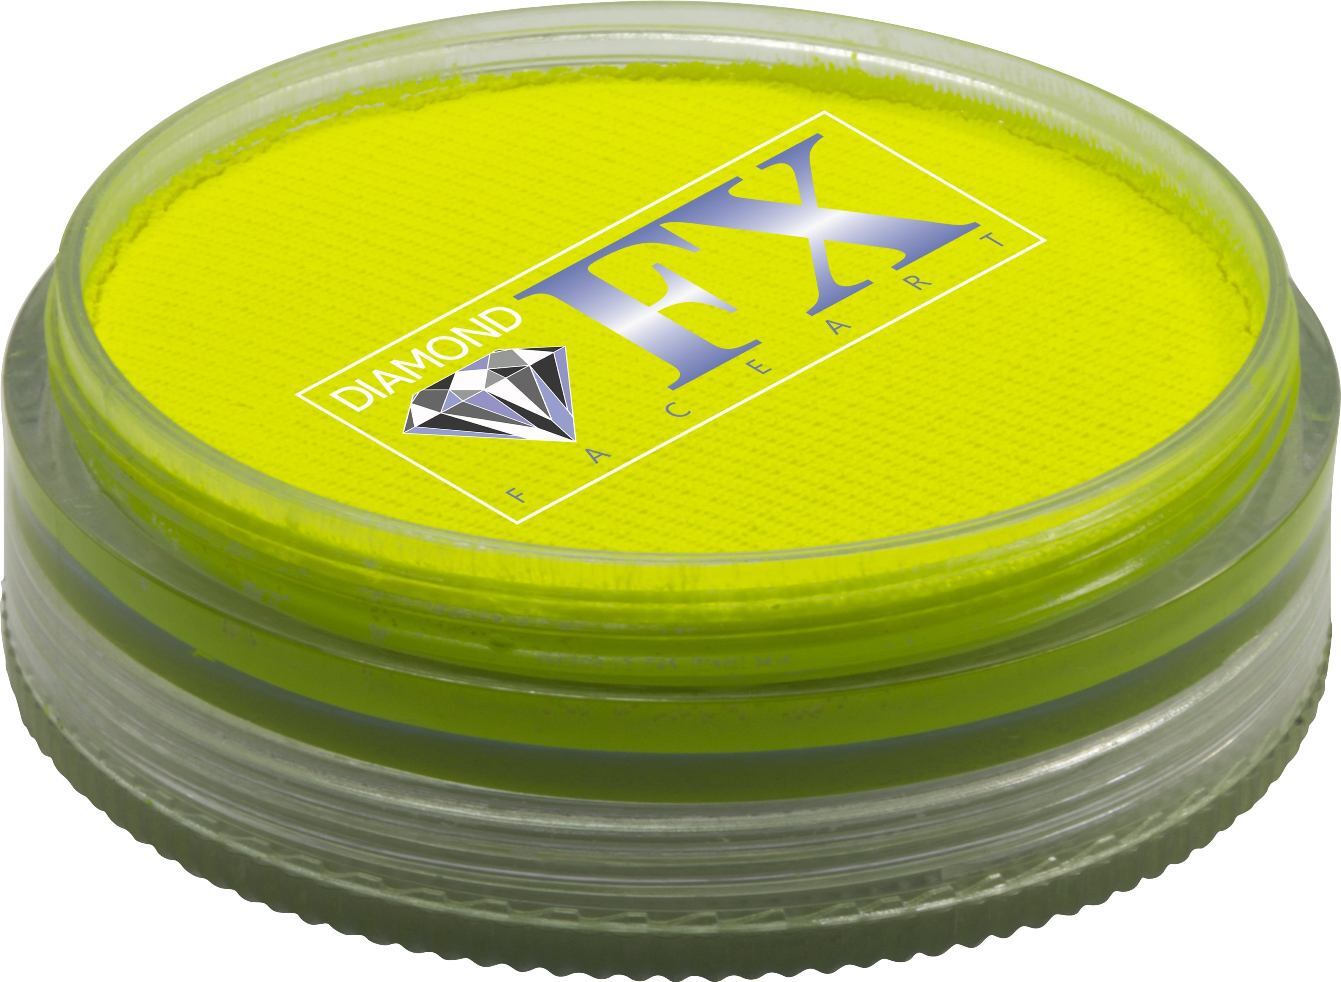 Diamond FX Yellow Neon 45g - Small Image